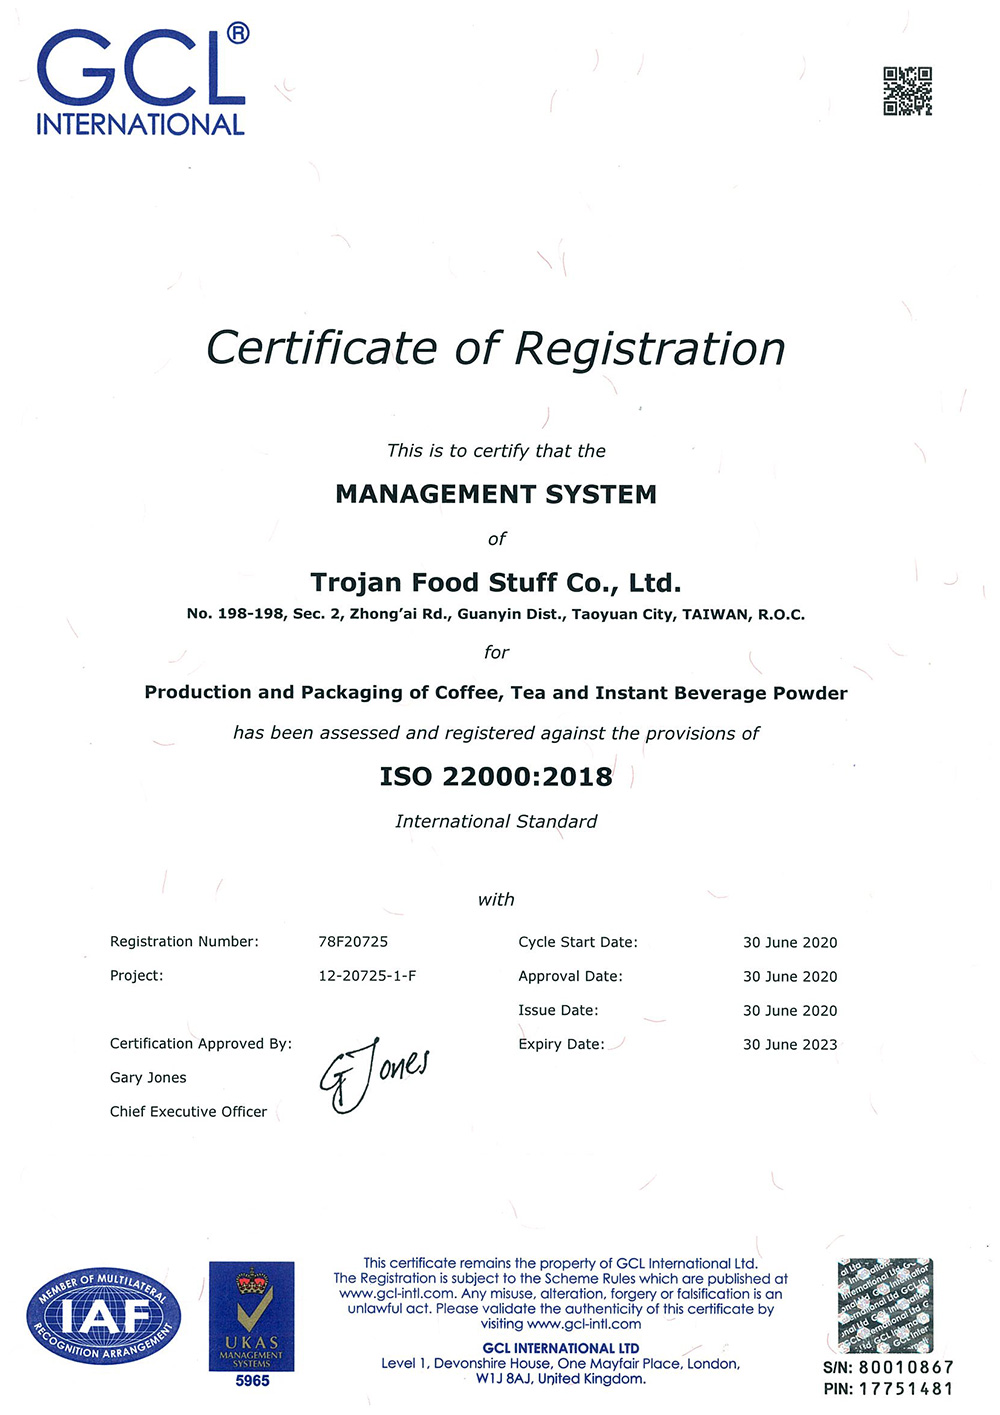 Trojan erwarb 2019 das ISO-22000-Zertifikat.